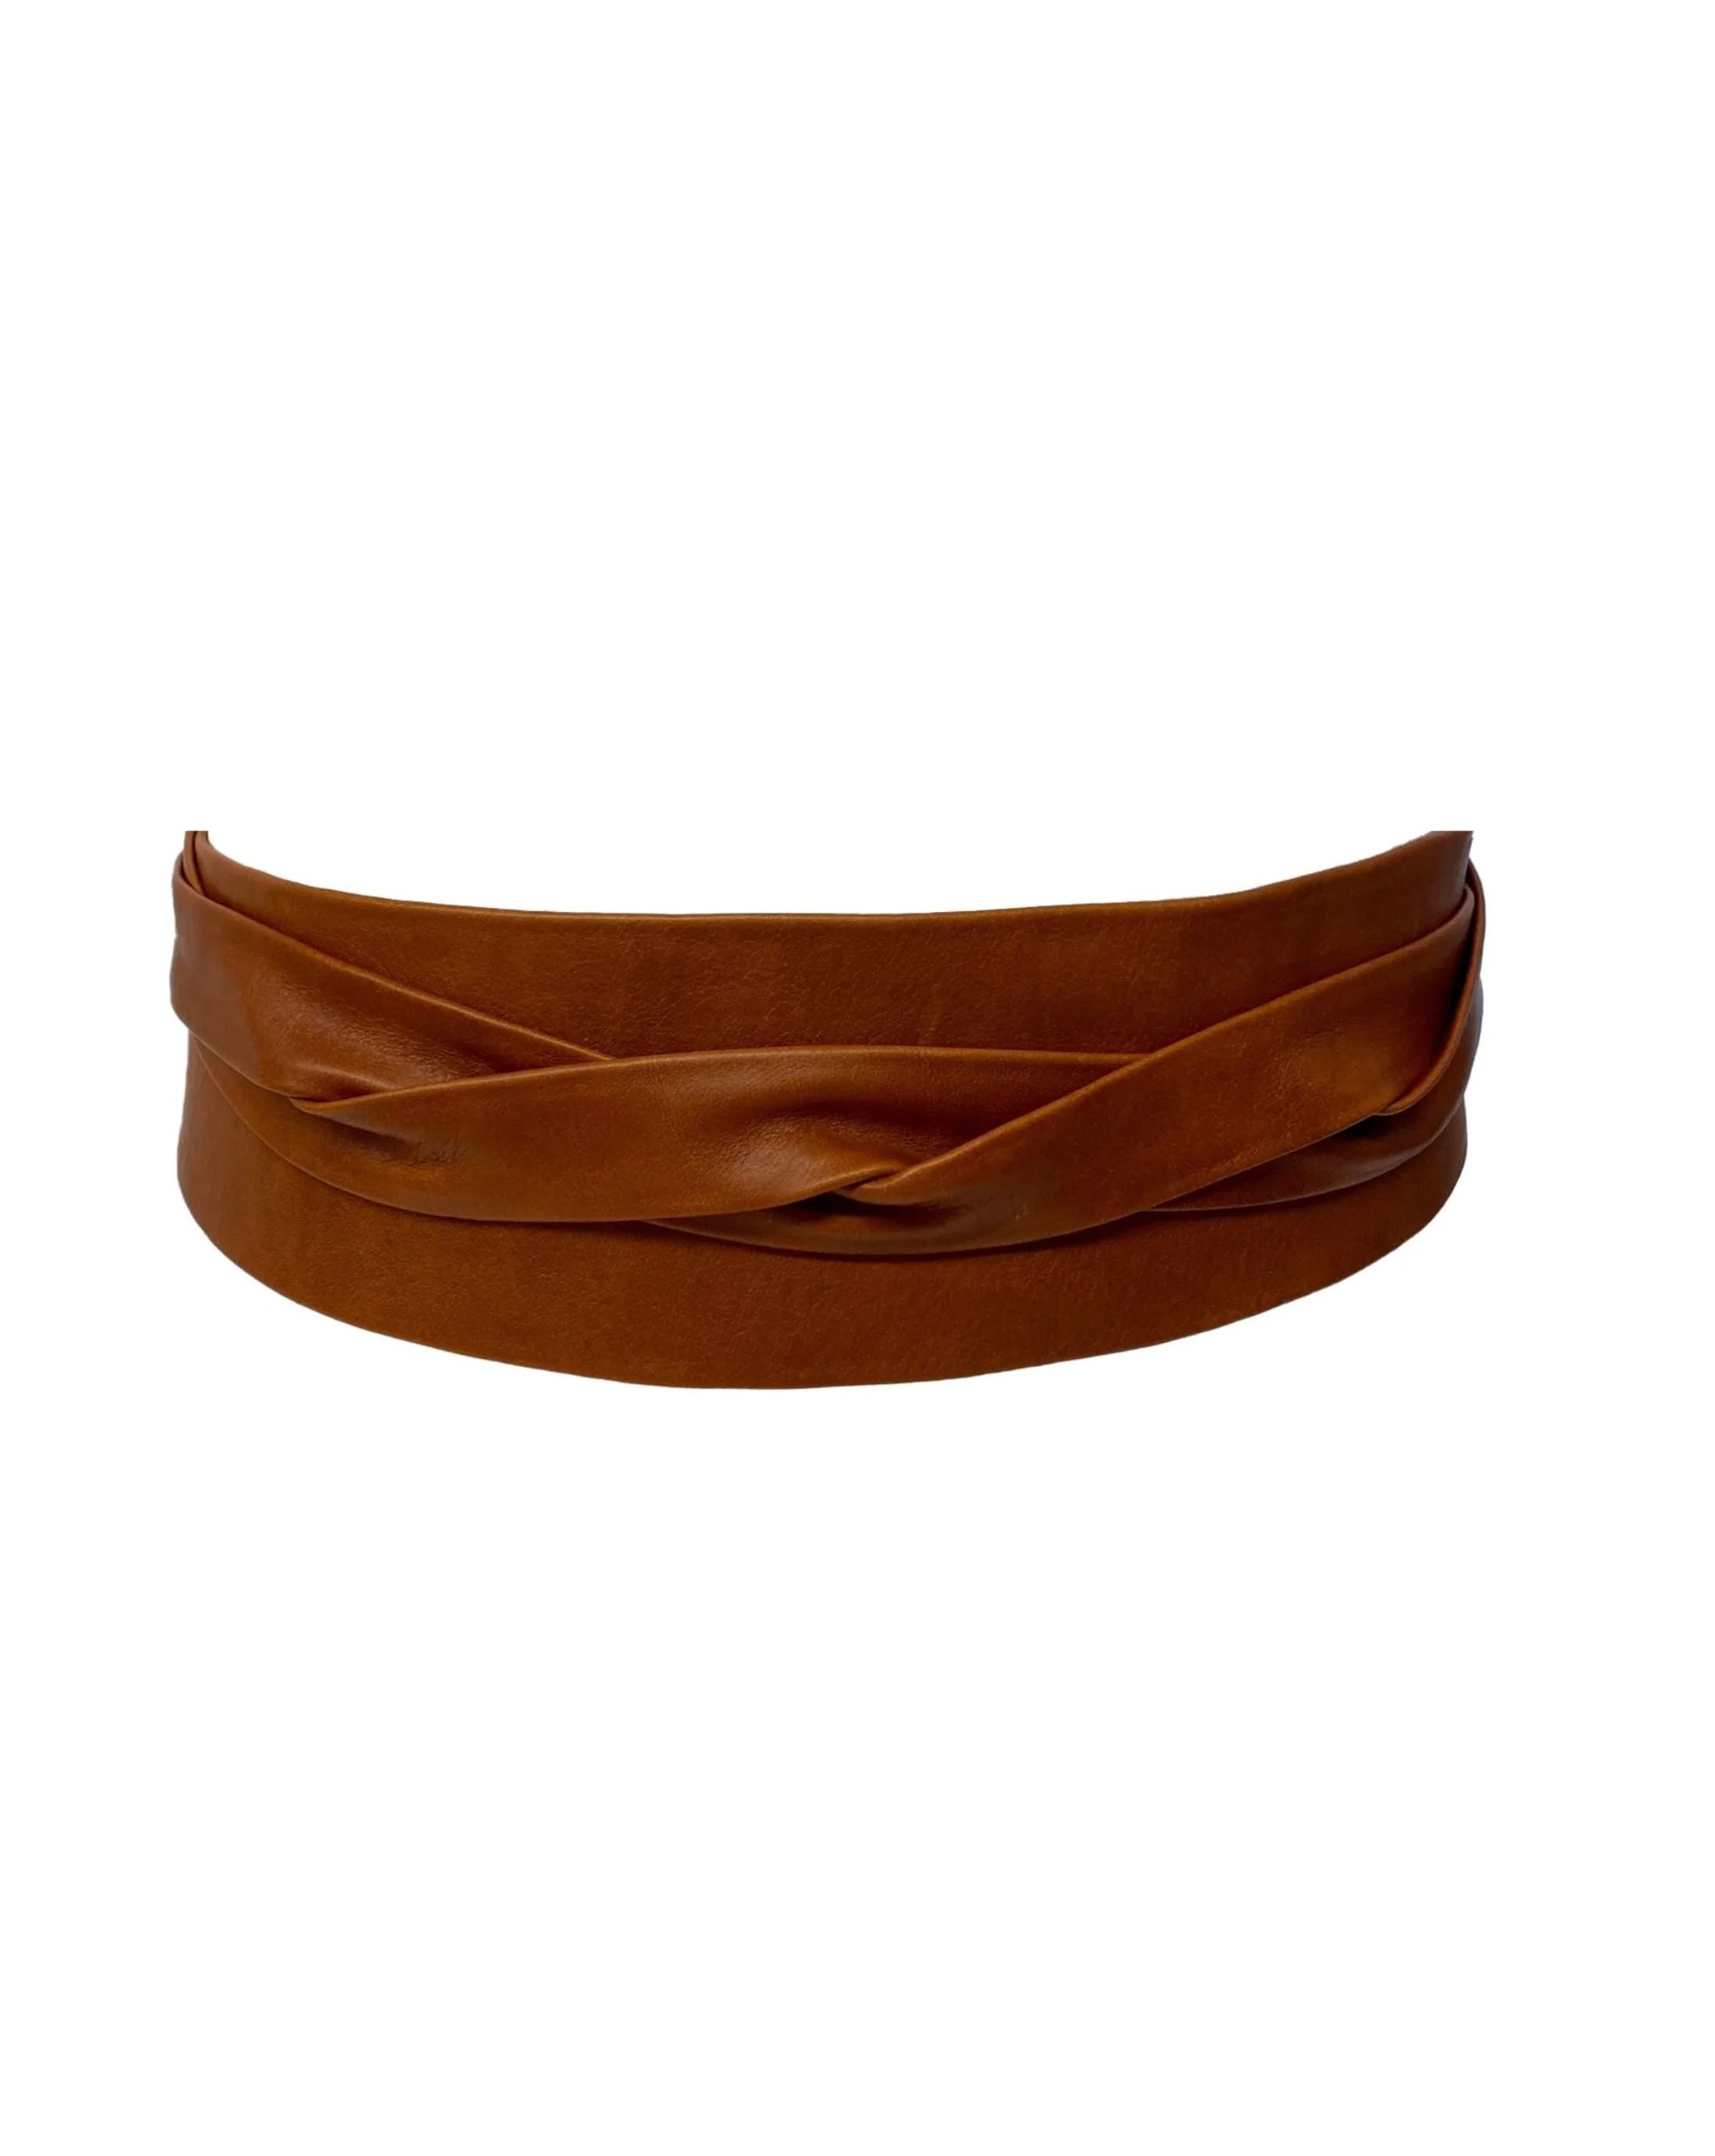 Wrap Belt | Wrap Cognac Belt | Women's Leather Belt - ADA Collection Online Store | ADA Collection